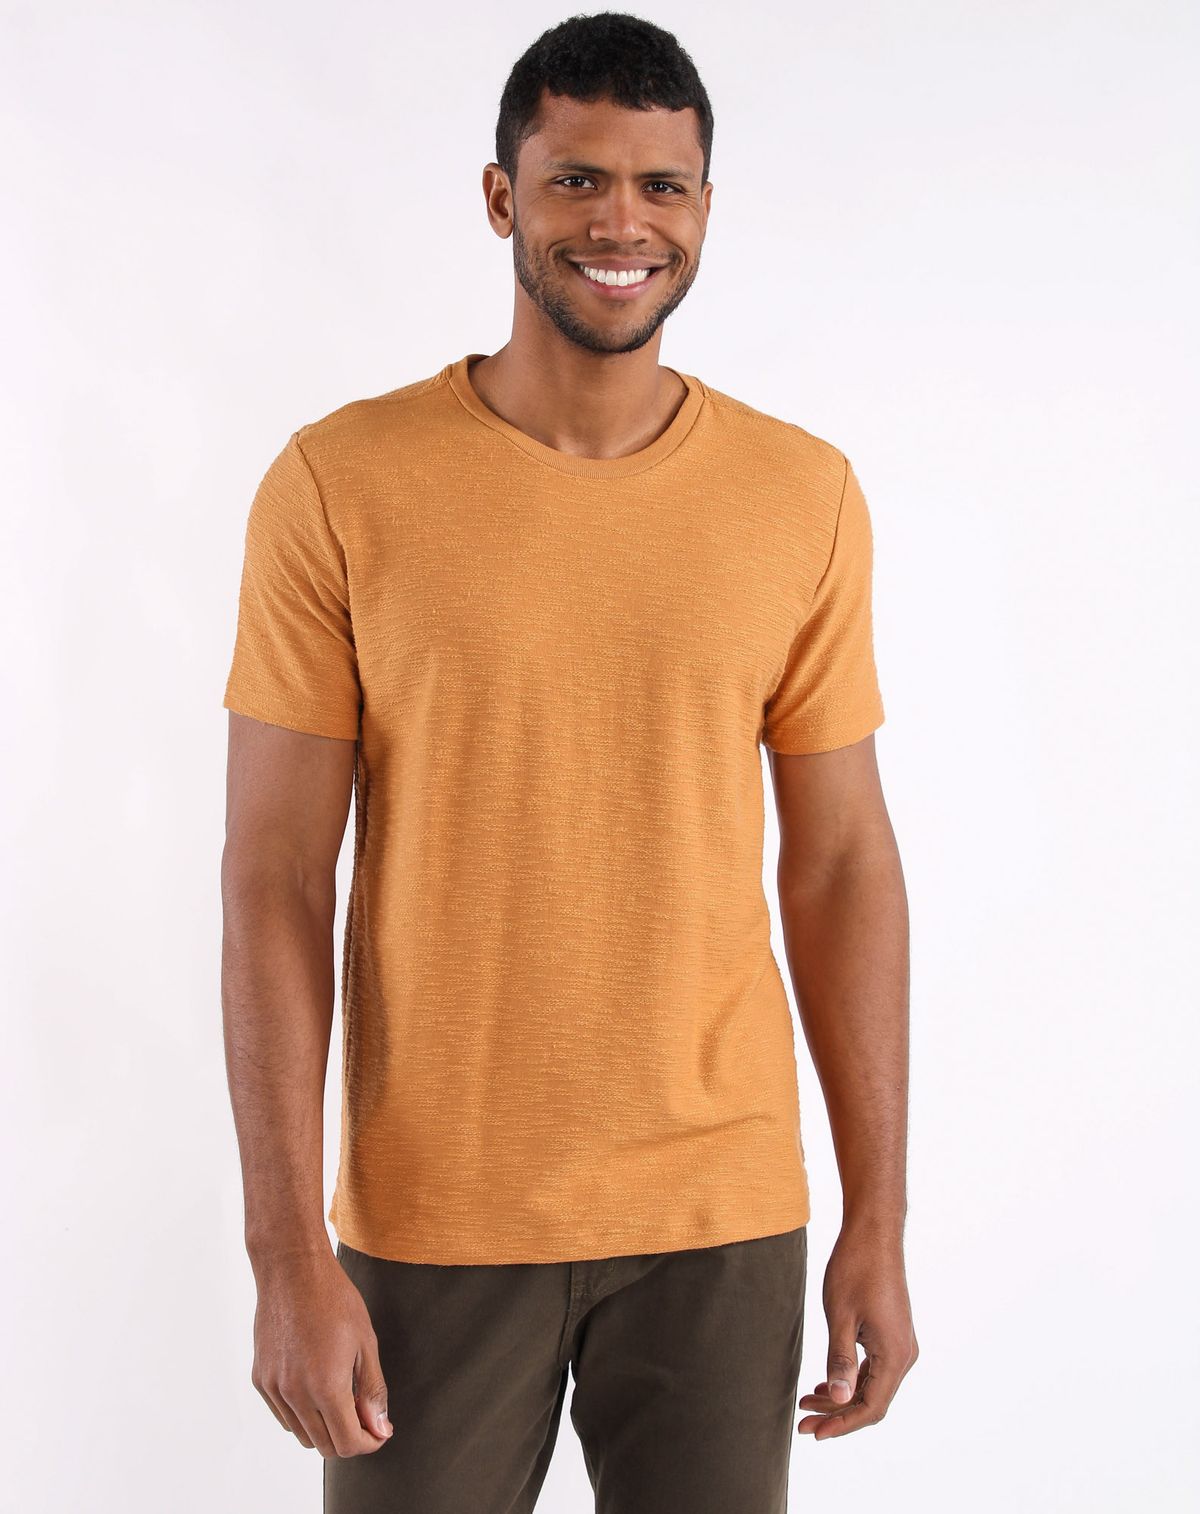 663090002-camiseta-manga-curta-basica-masculina-textura-caramelo-m-1da